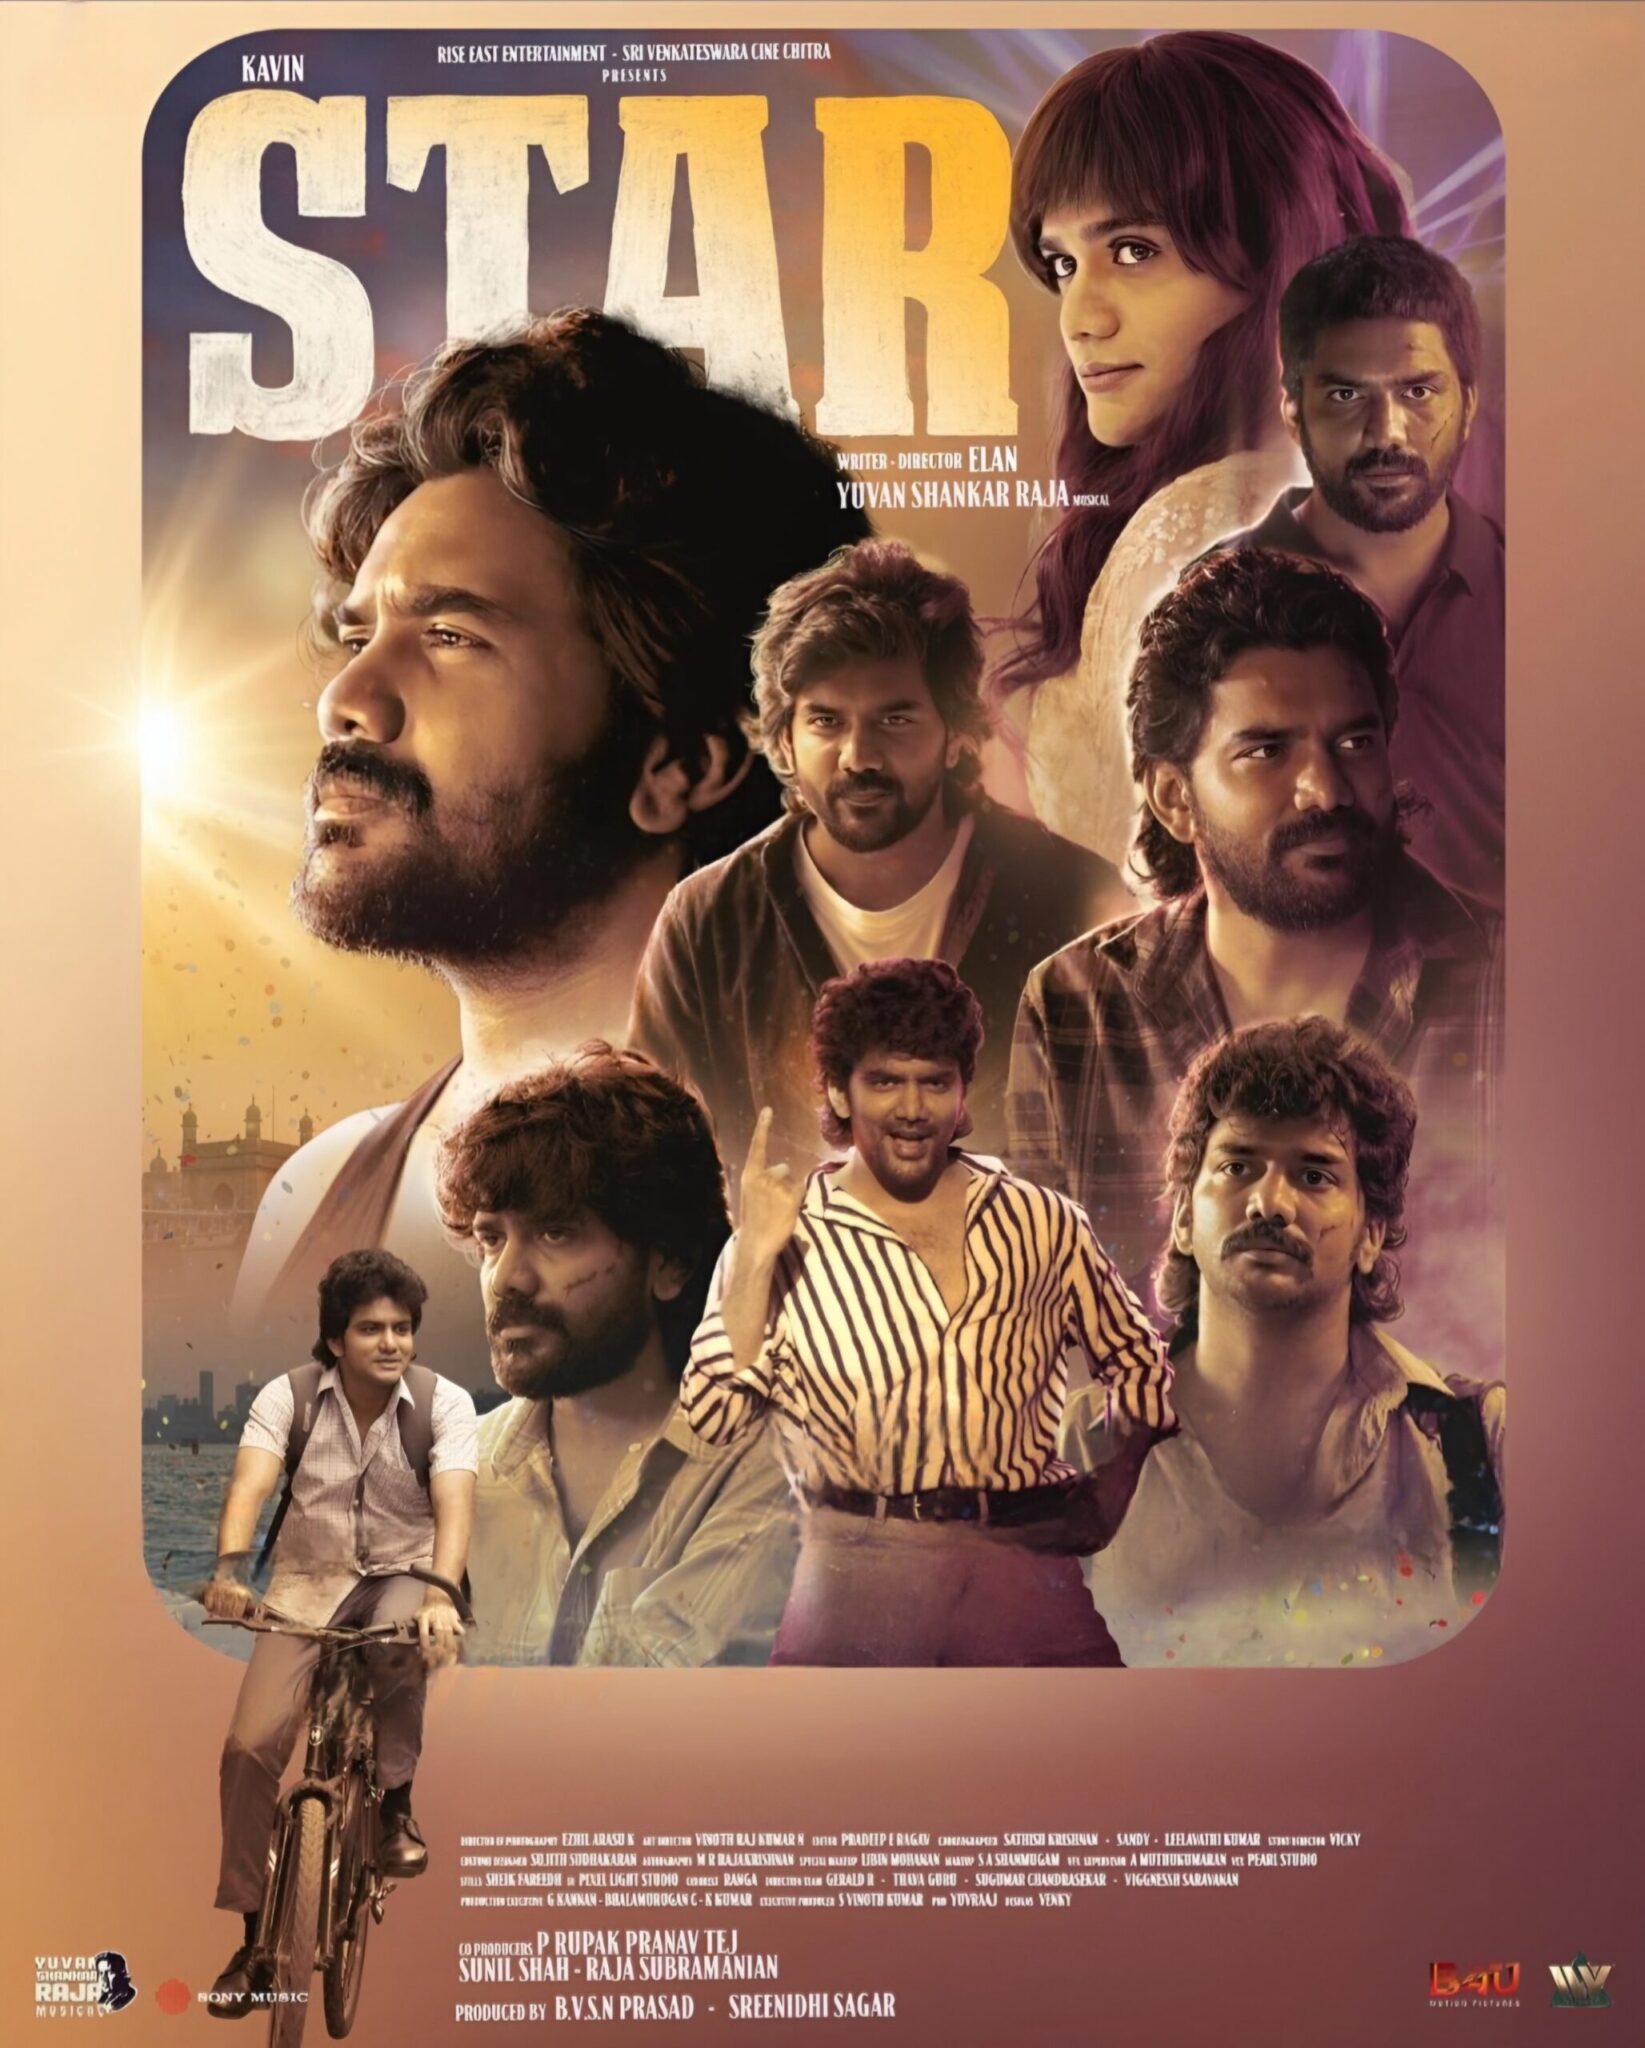 Latest Telugu Cinema News, Latest News of tollywood,latest news of telugu movies, Kavin Movie STAR Streaming Update, Kavin New Movie OTT Update, Kavin next movies, Kavin Movie Update,